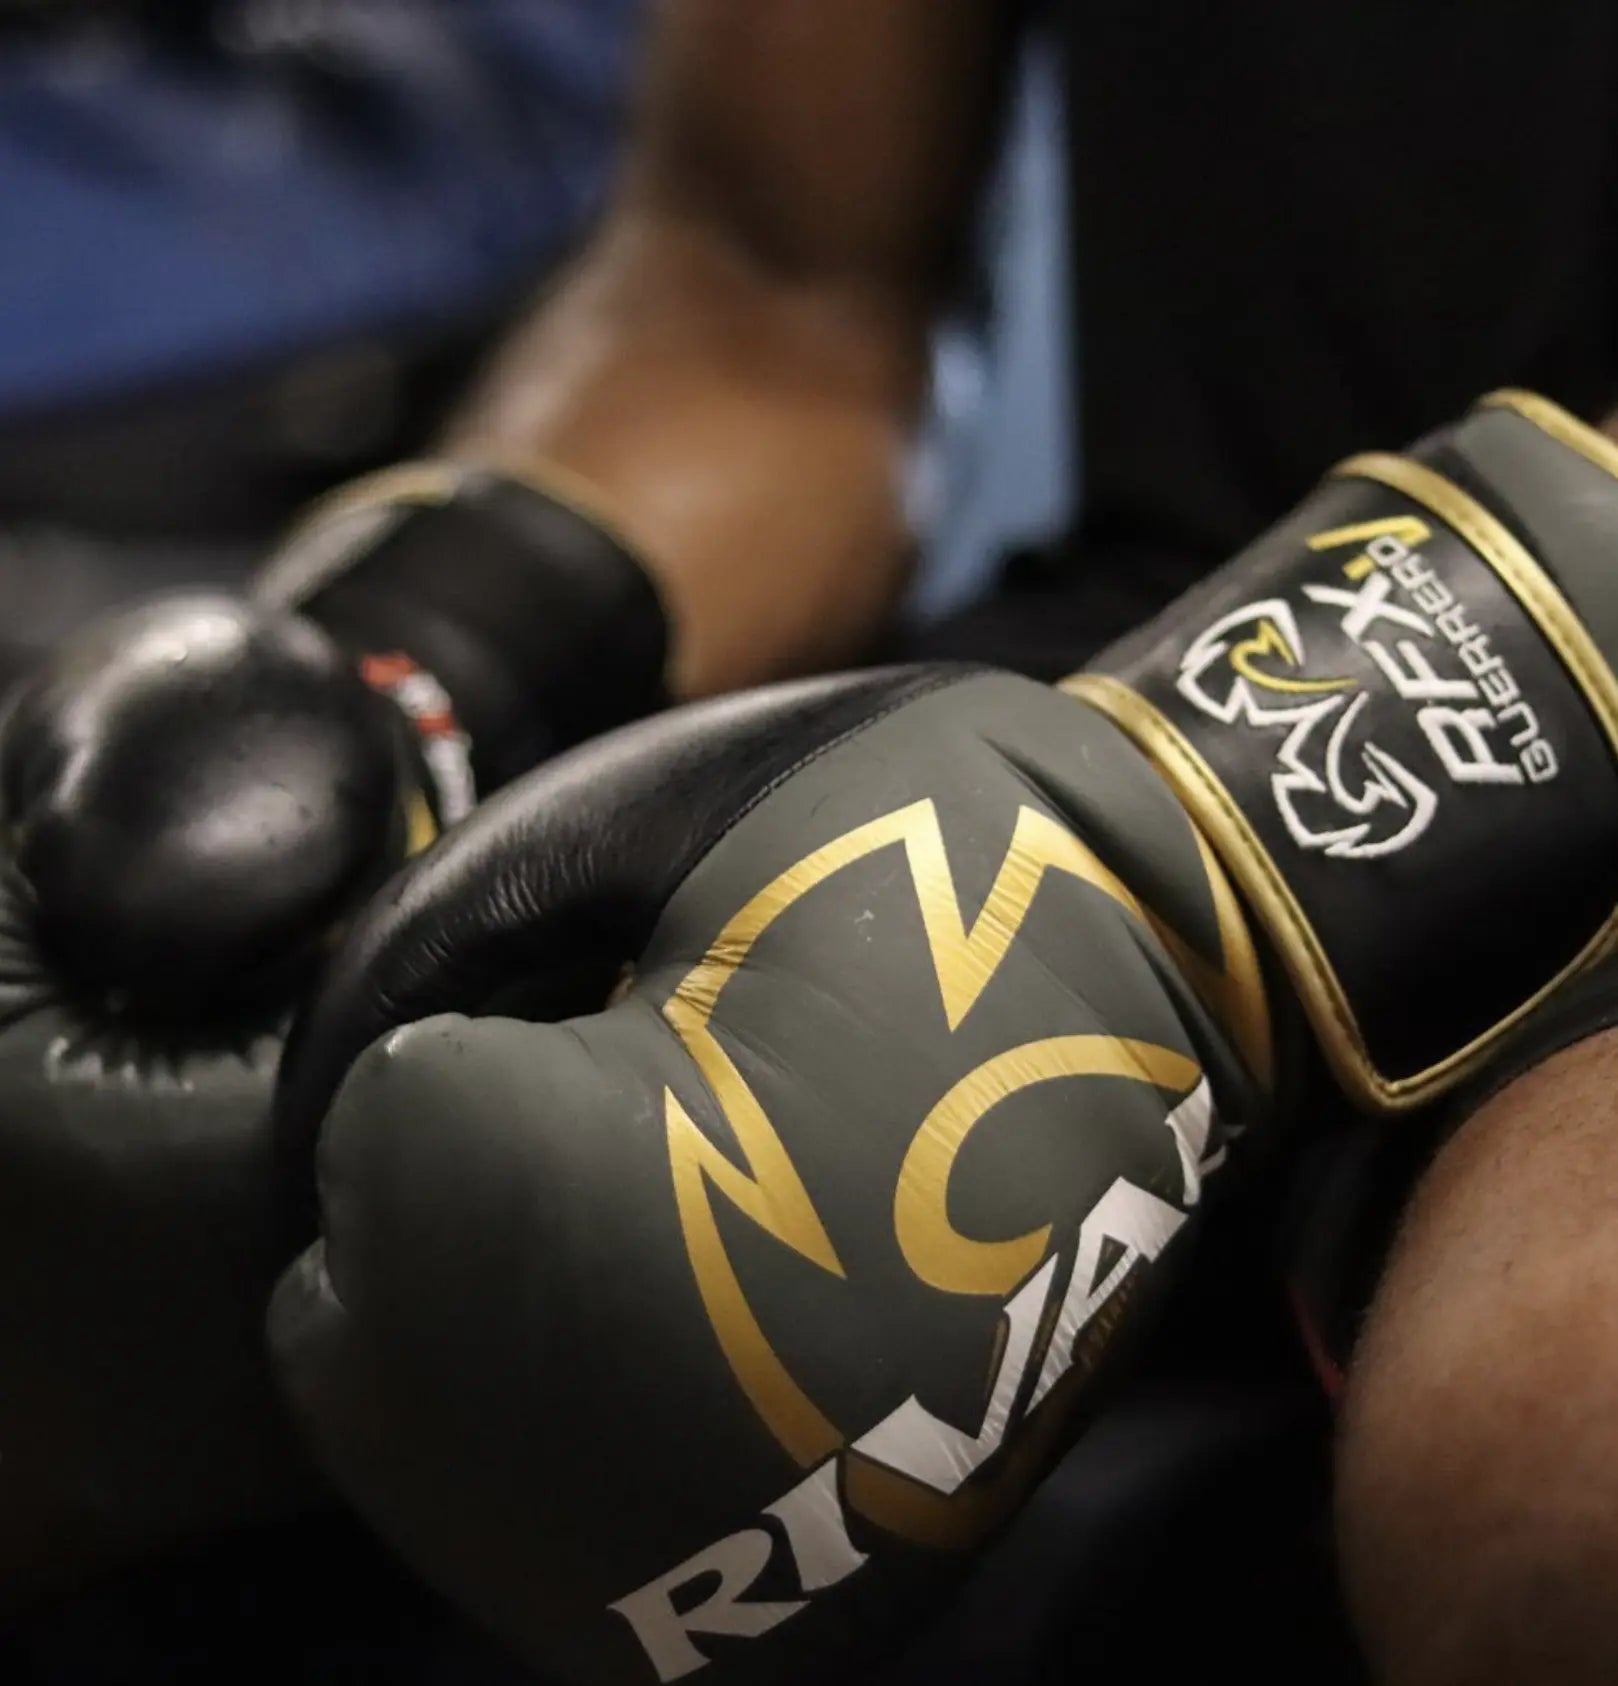 Rival Boxing RFX-Guerrero-V HDE-F Hook and Loop Bag Gloves RIVAL